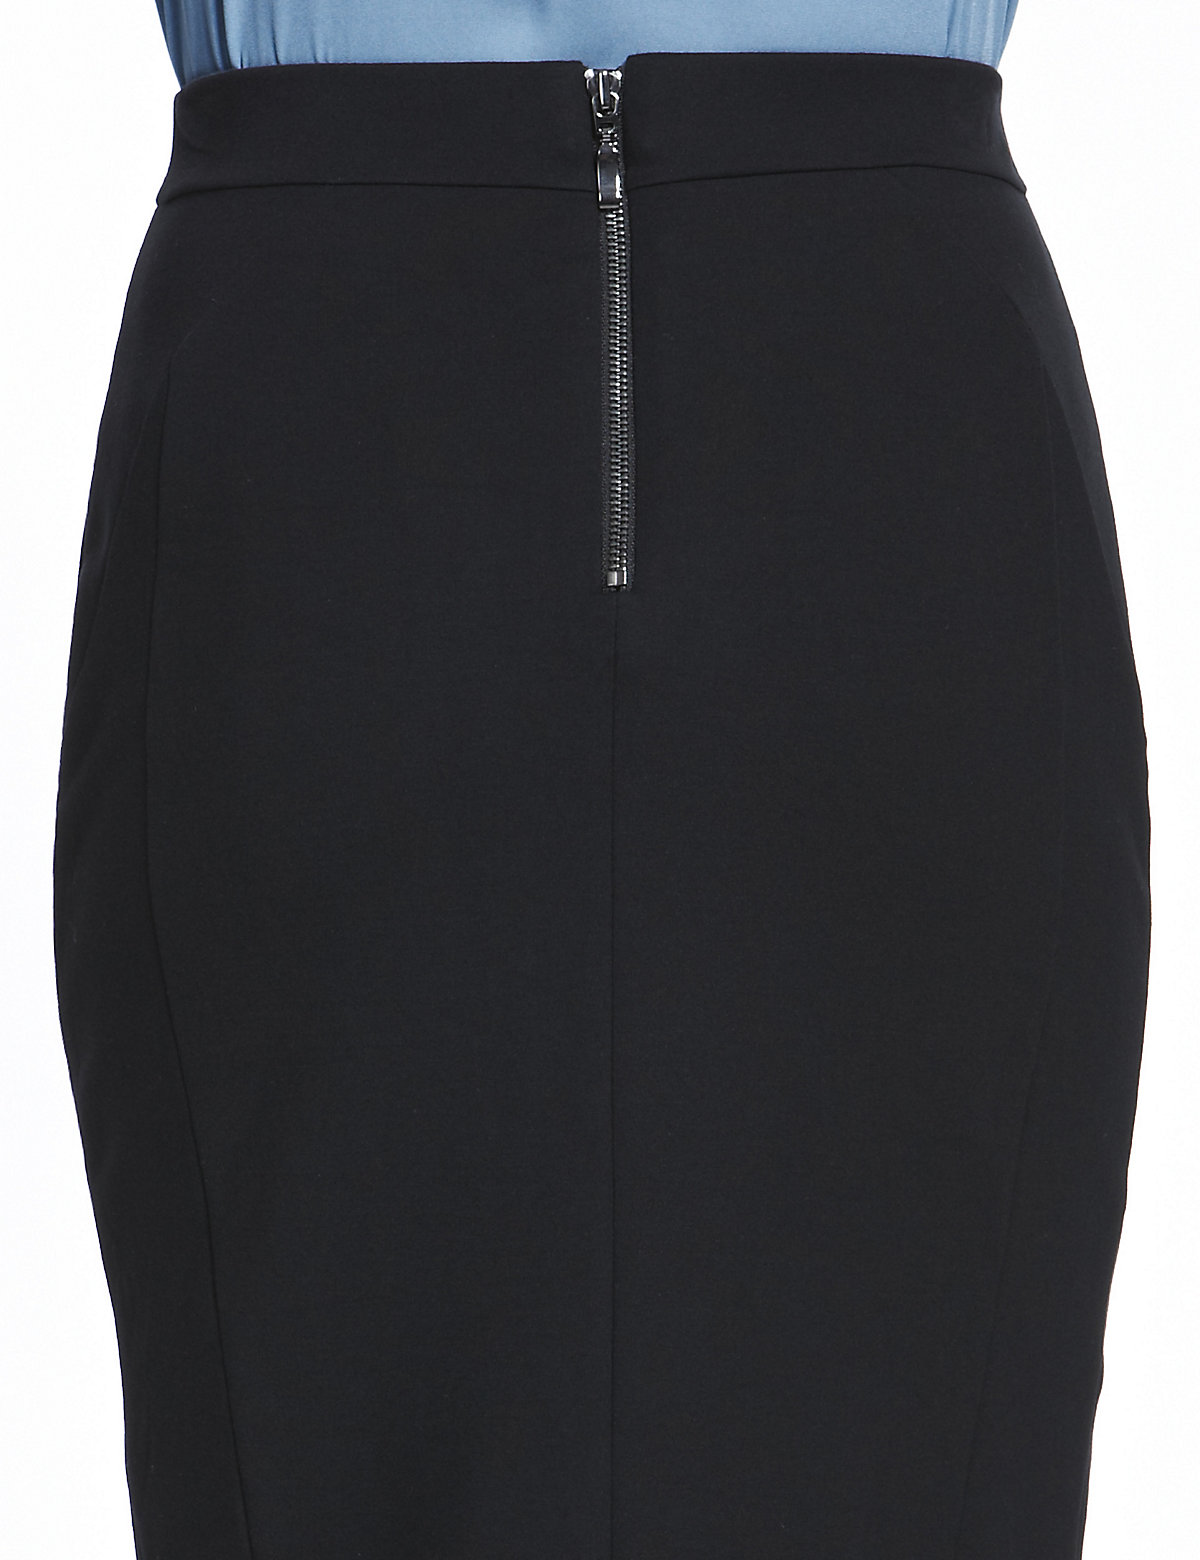 Marks and Spencer - - M&5 BLACK Seam Detail Knee Length Pencil Skirt ...